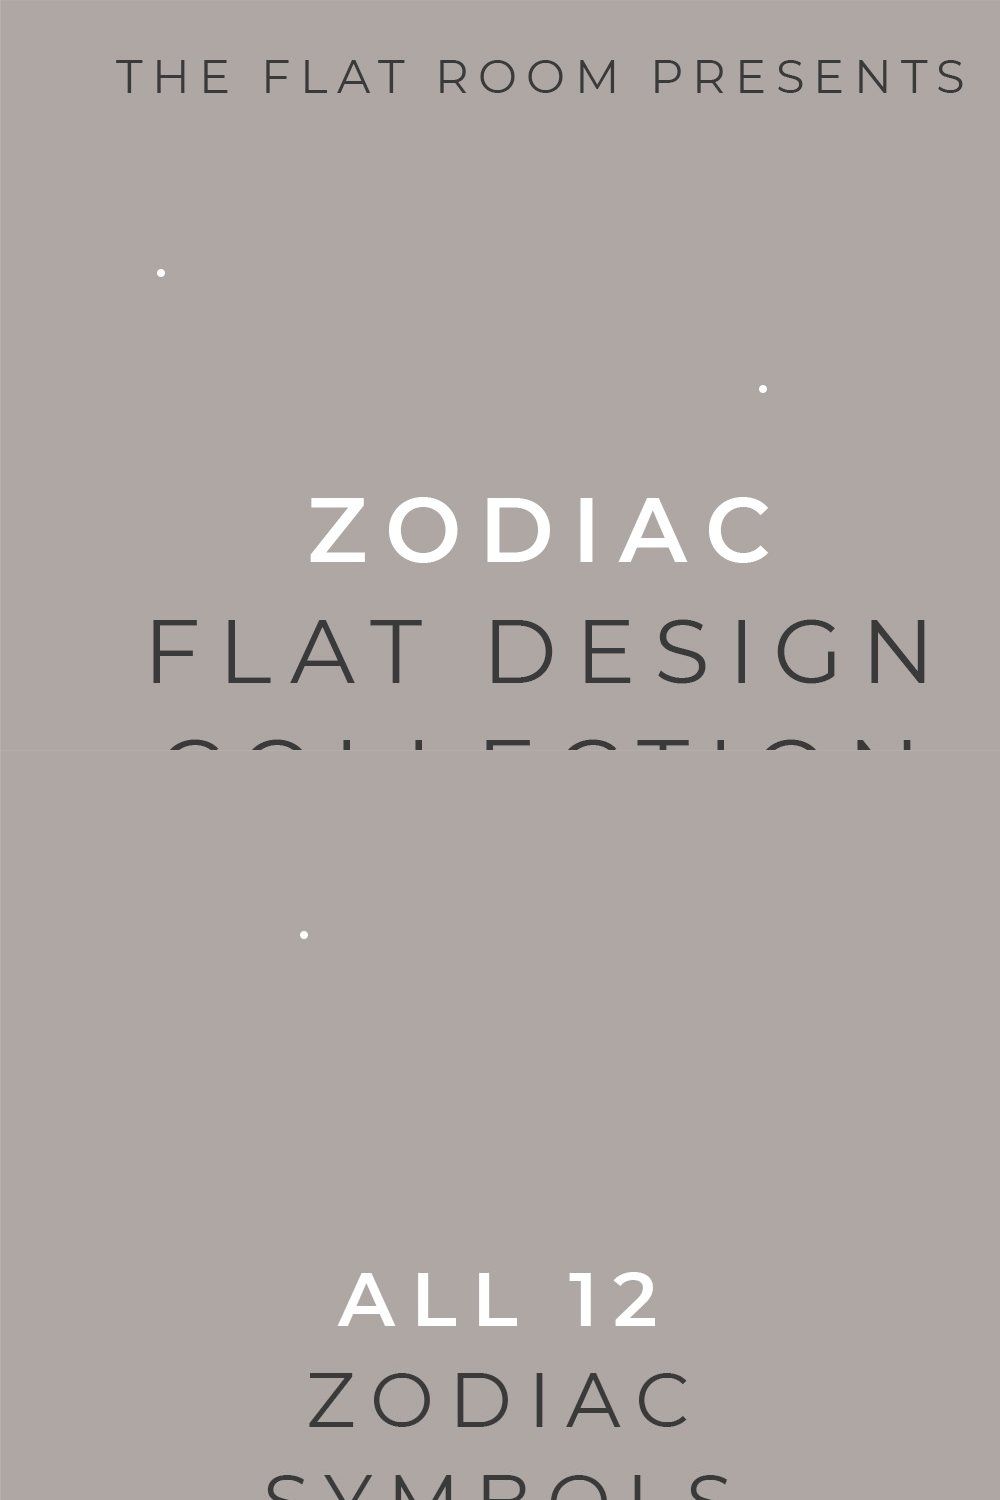 Zodiac Flat Design Collection pinterest preview image.